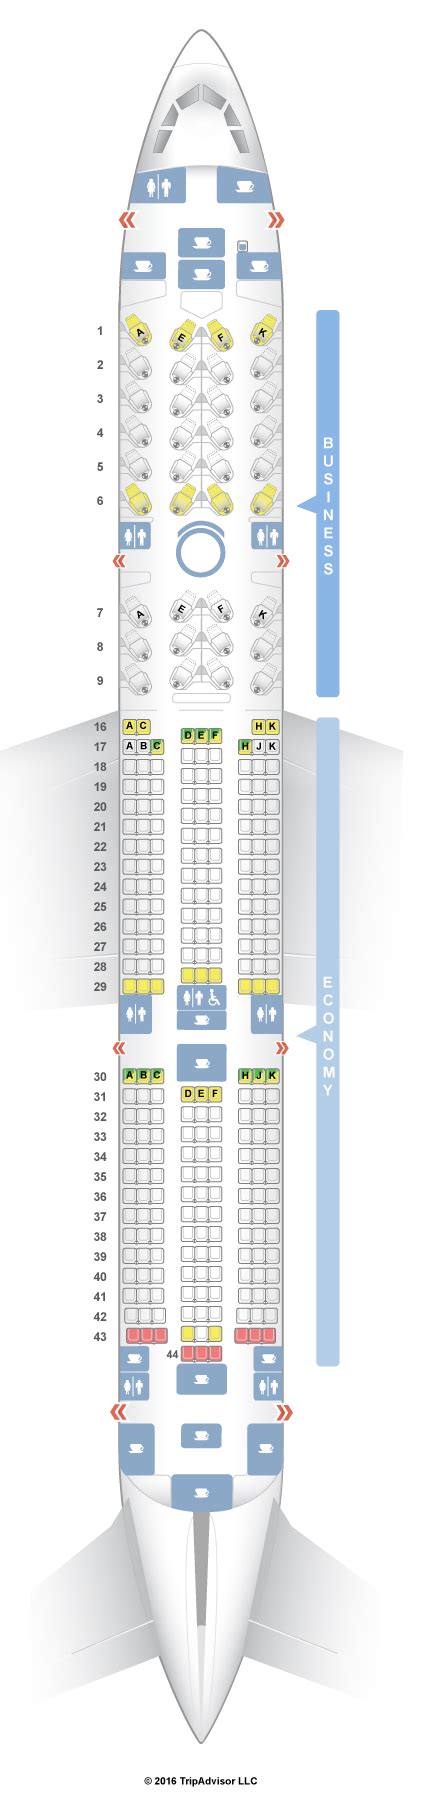 Seatguru Seat Map Qatar Airways Airbus A350 350